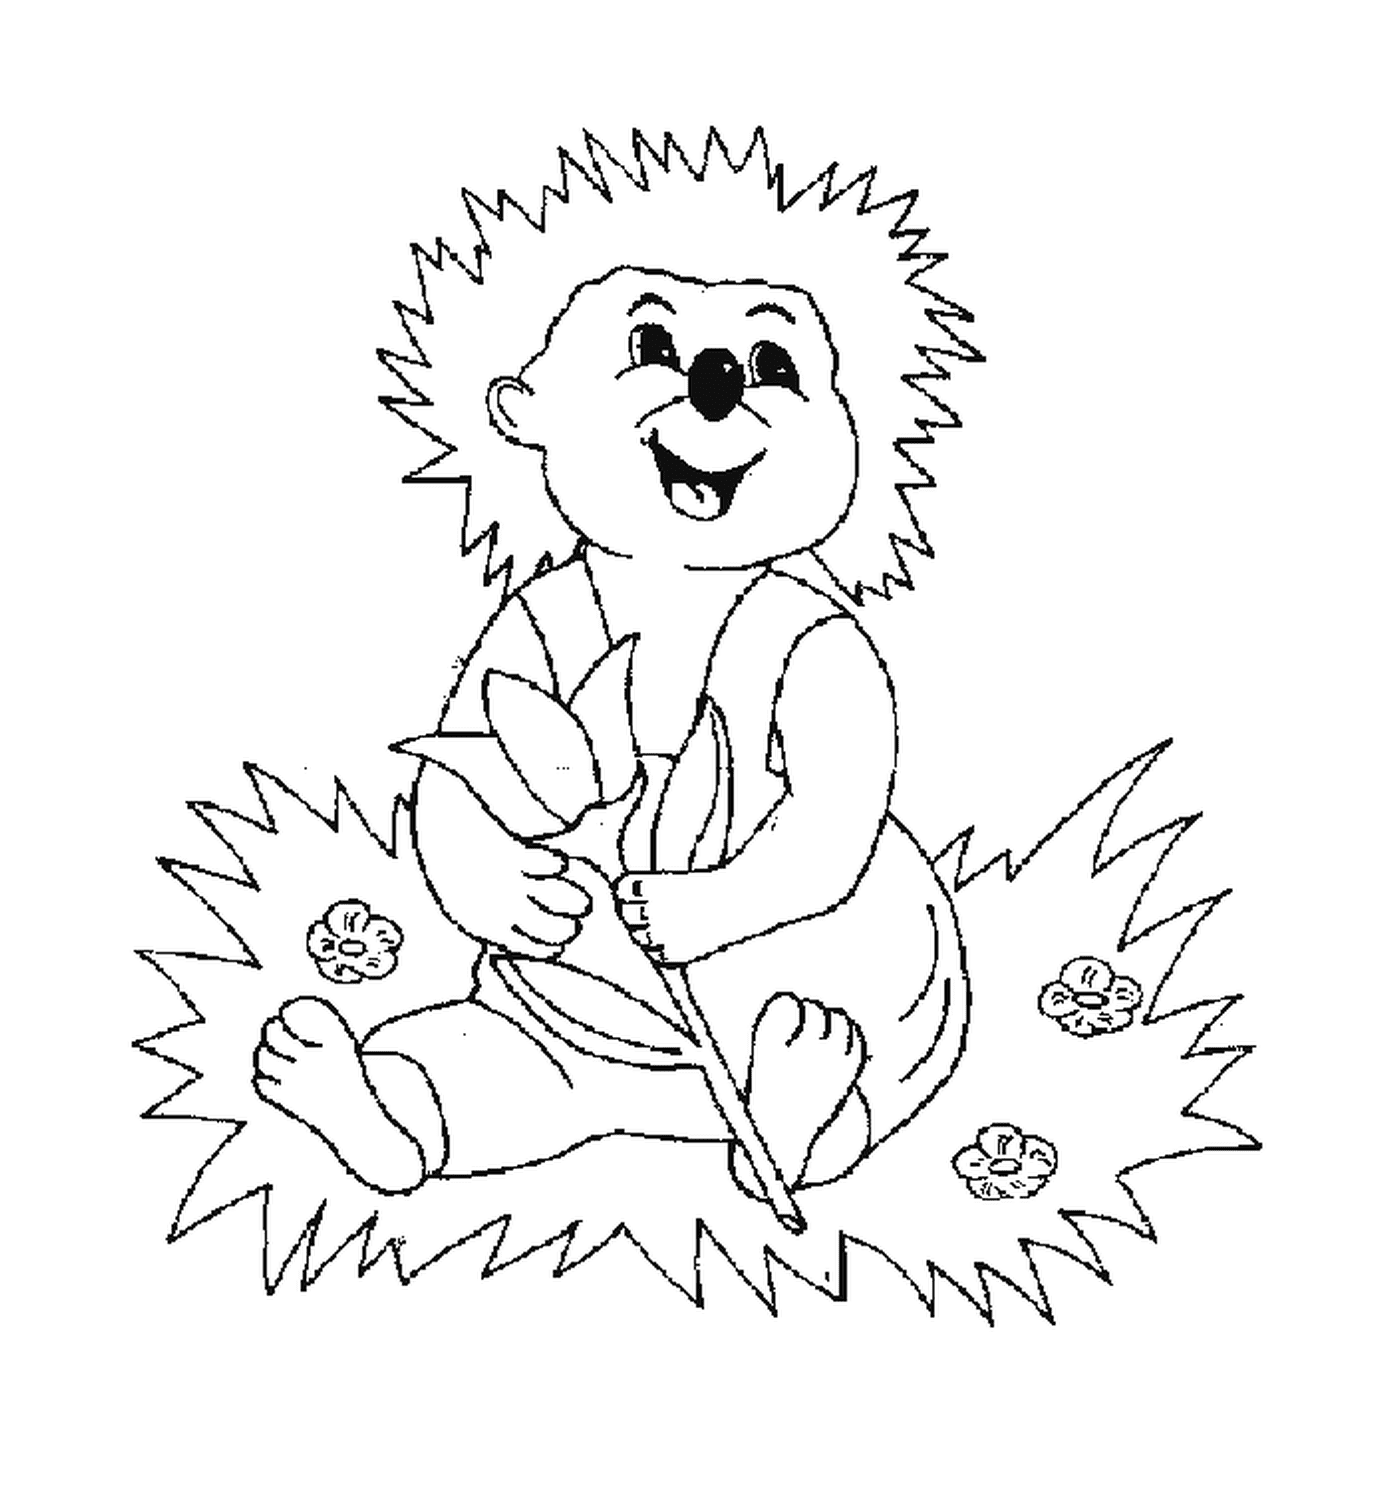  Hedgehog seduto nell'erba 